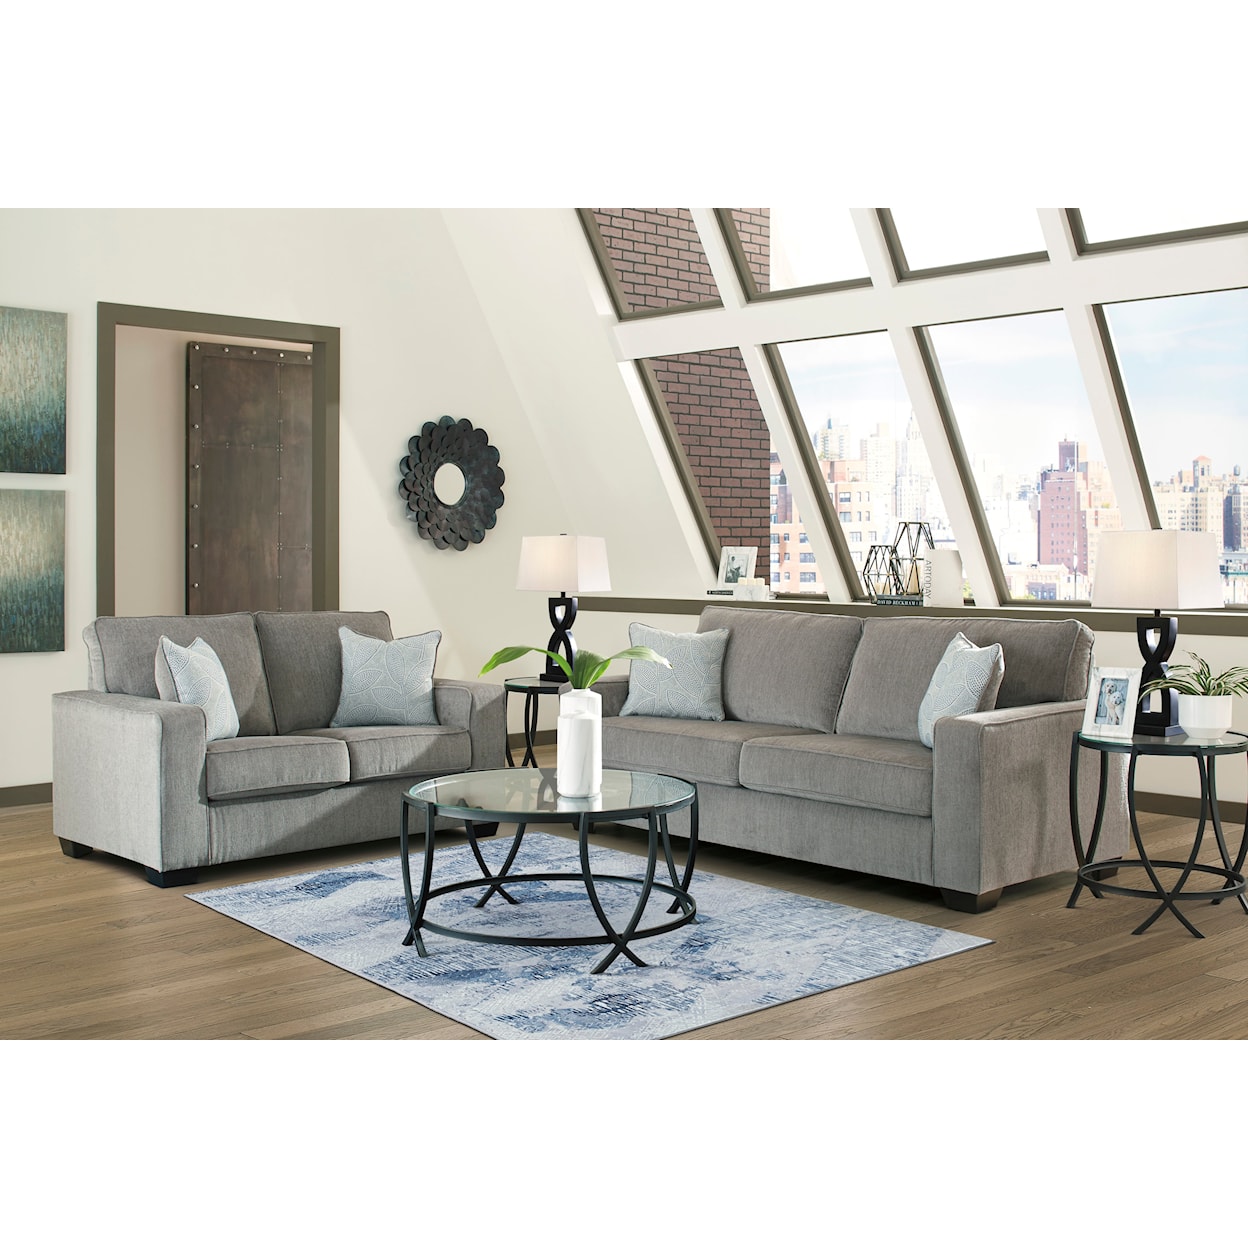 Signature Design by Ashley Altari 3 Piece Living Room Set